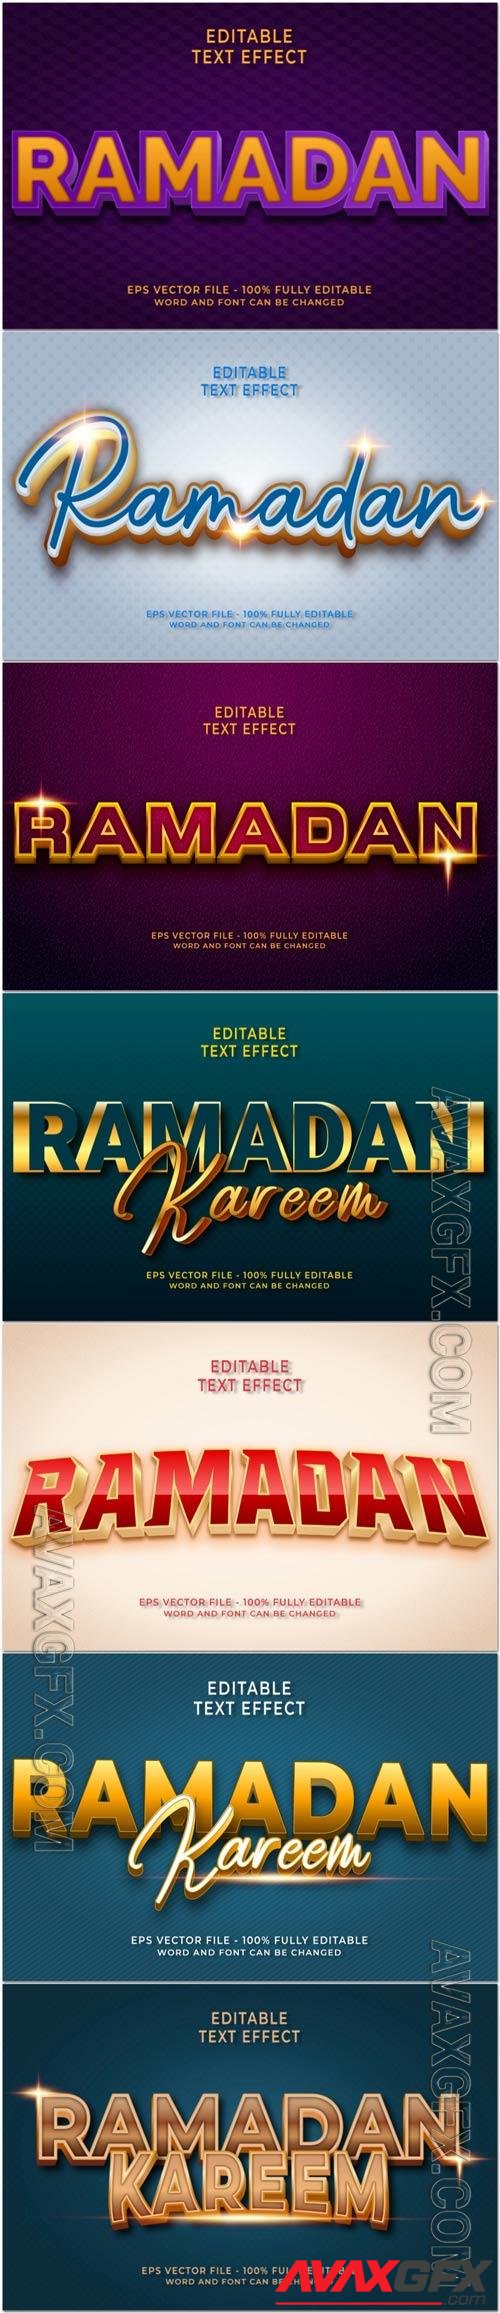 Ramadan kareem gold editable text effect